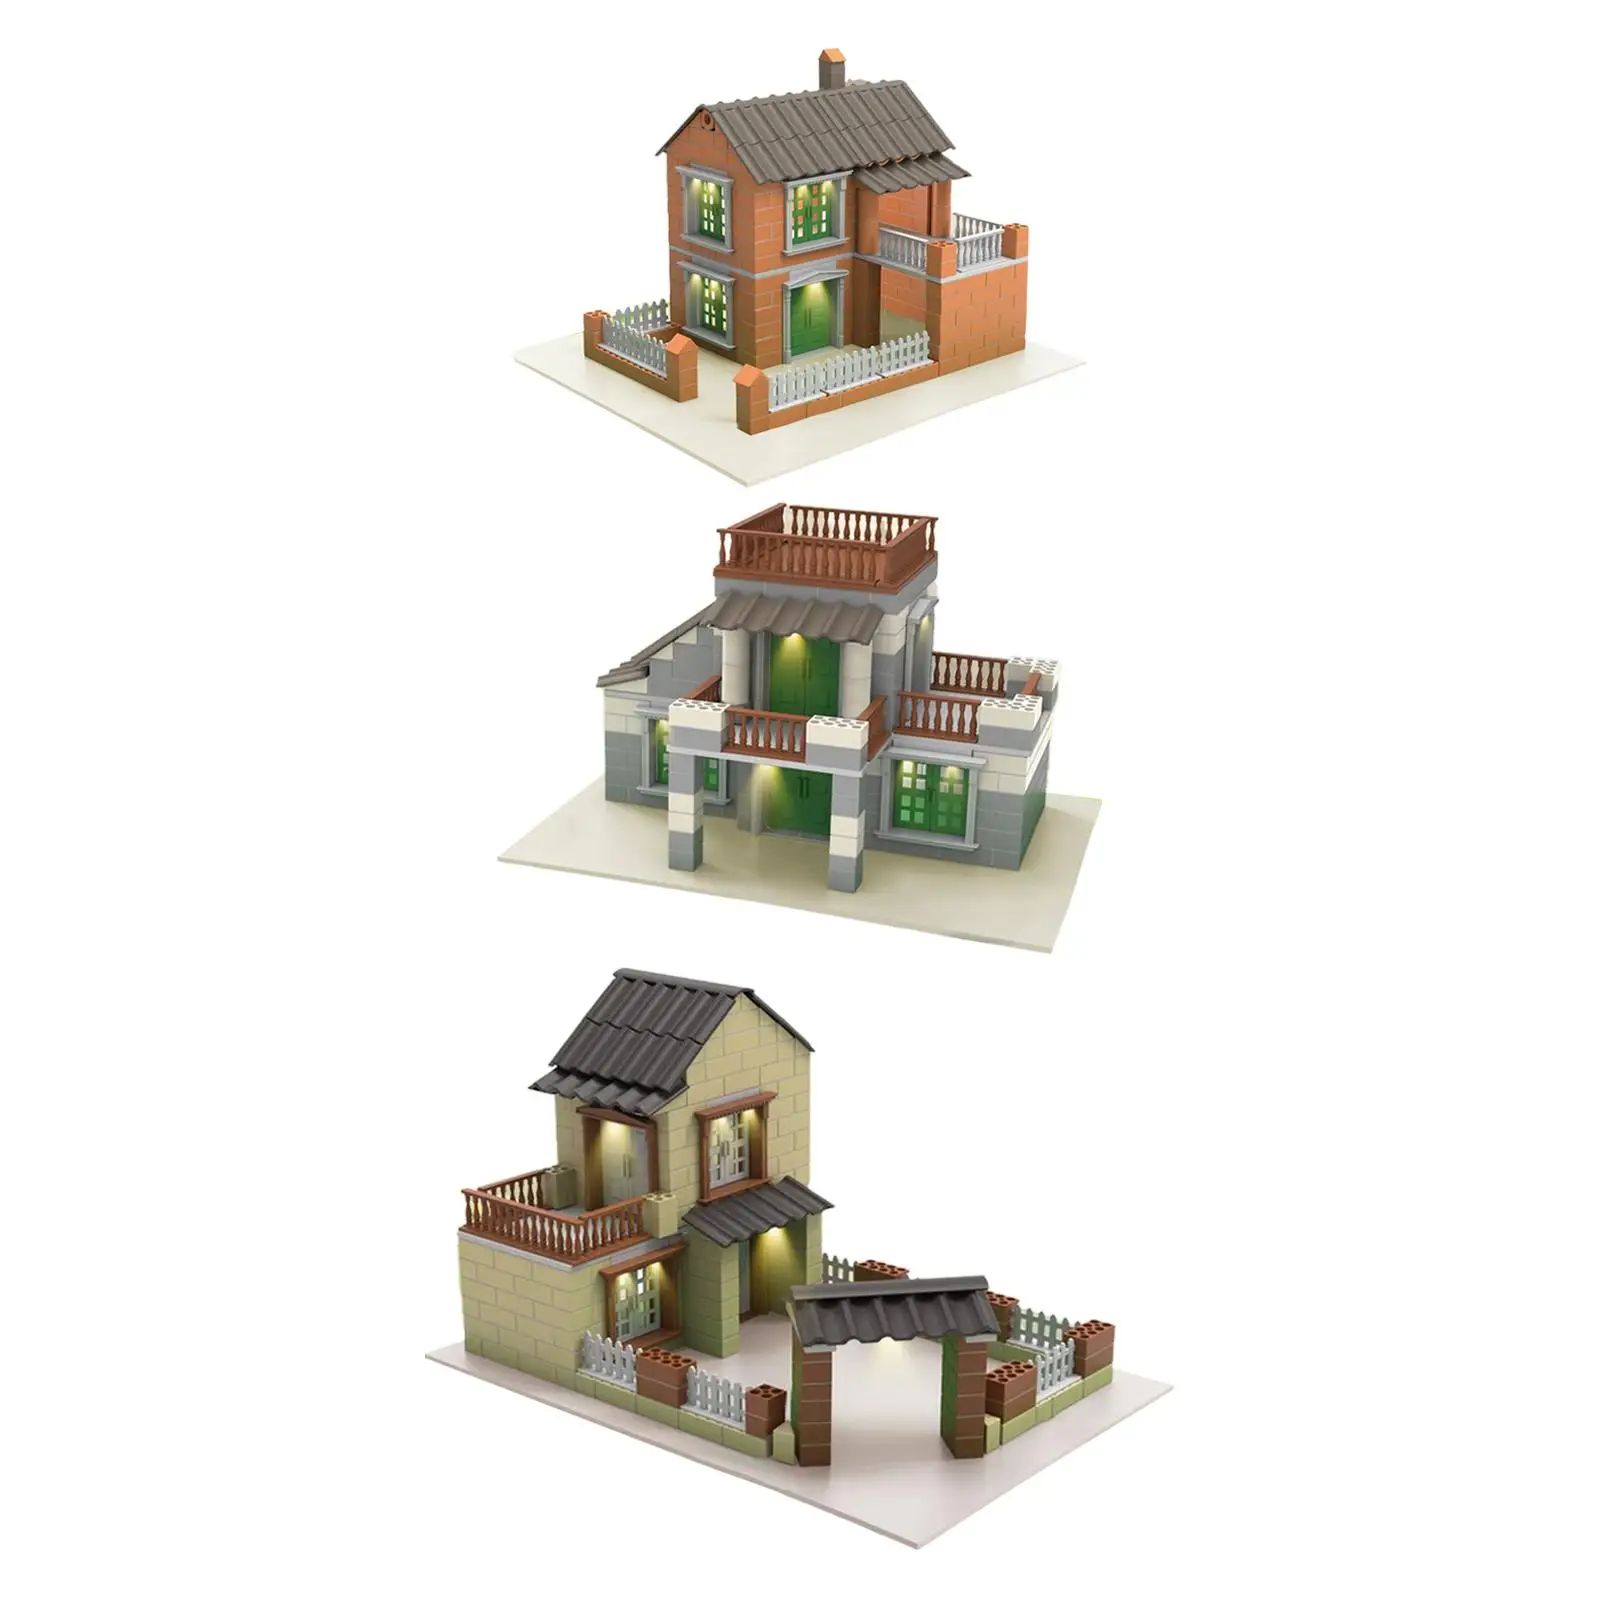 Unfinished Miniature House DIY Kit Model Building Kit Party Favor DIY Project for Living Room Home Shelf Decoration Collection